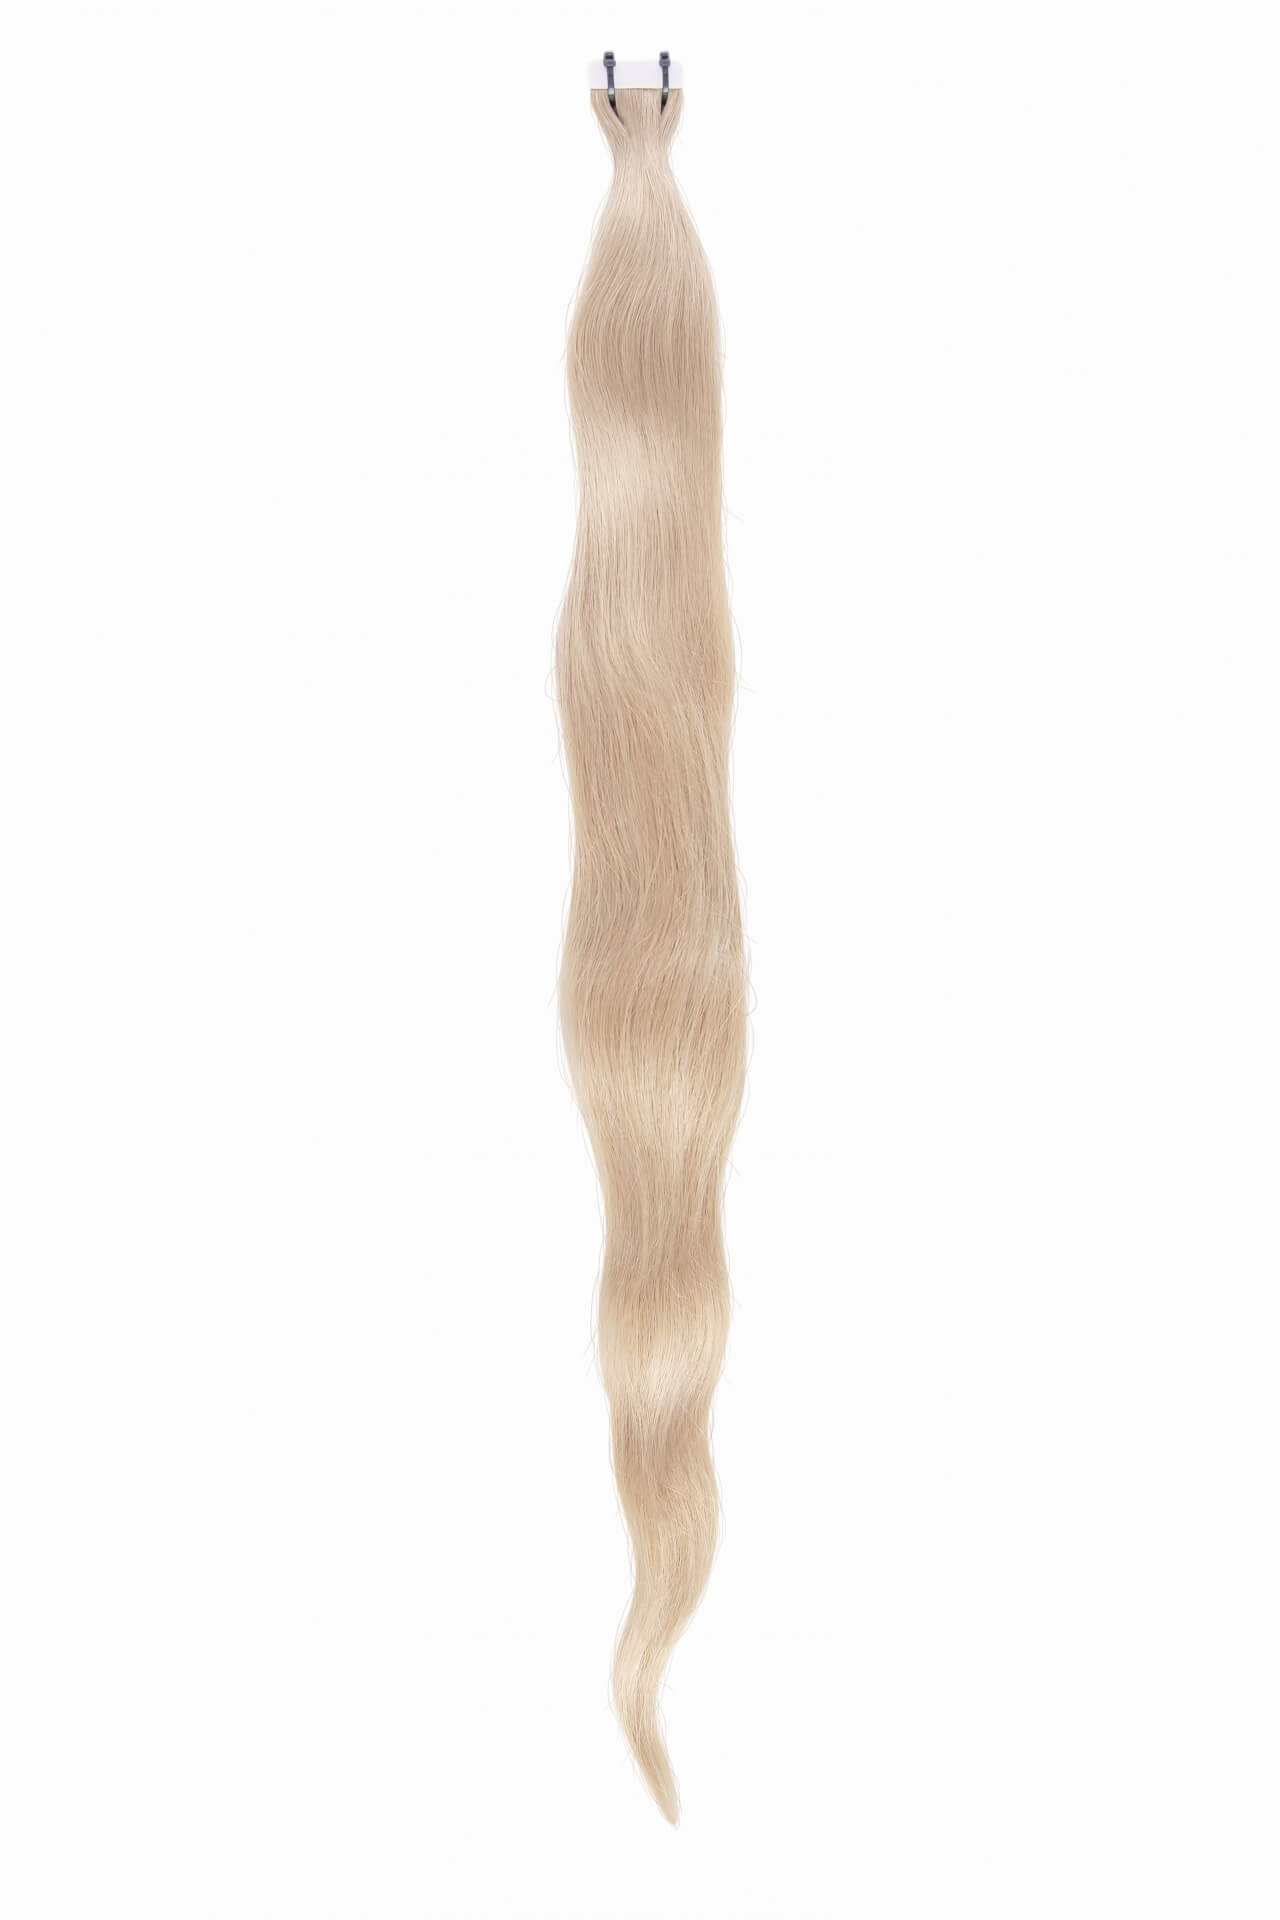 Vlasové pásky Original, odstín 4